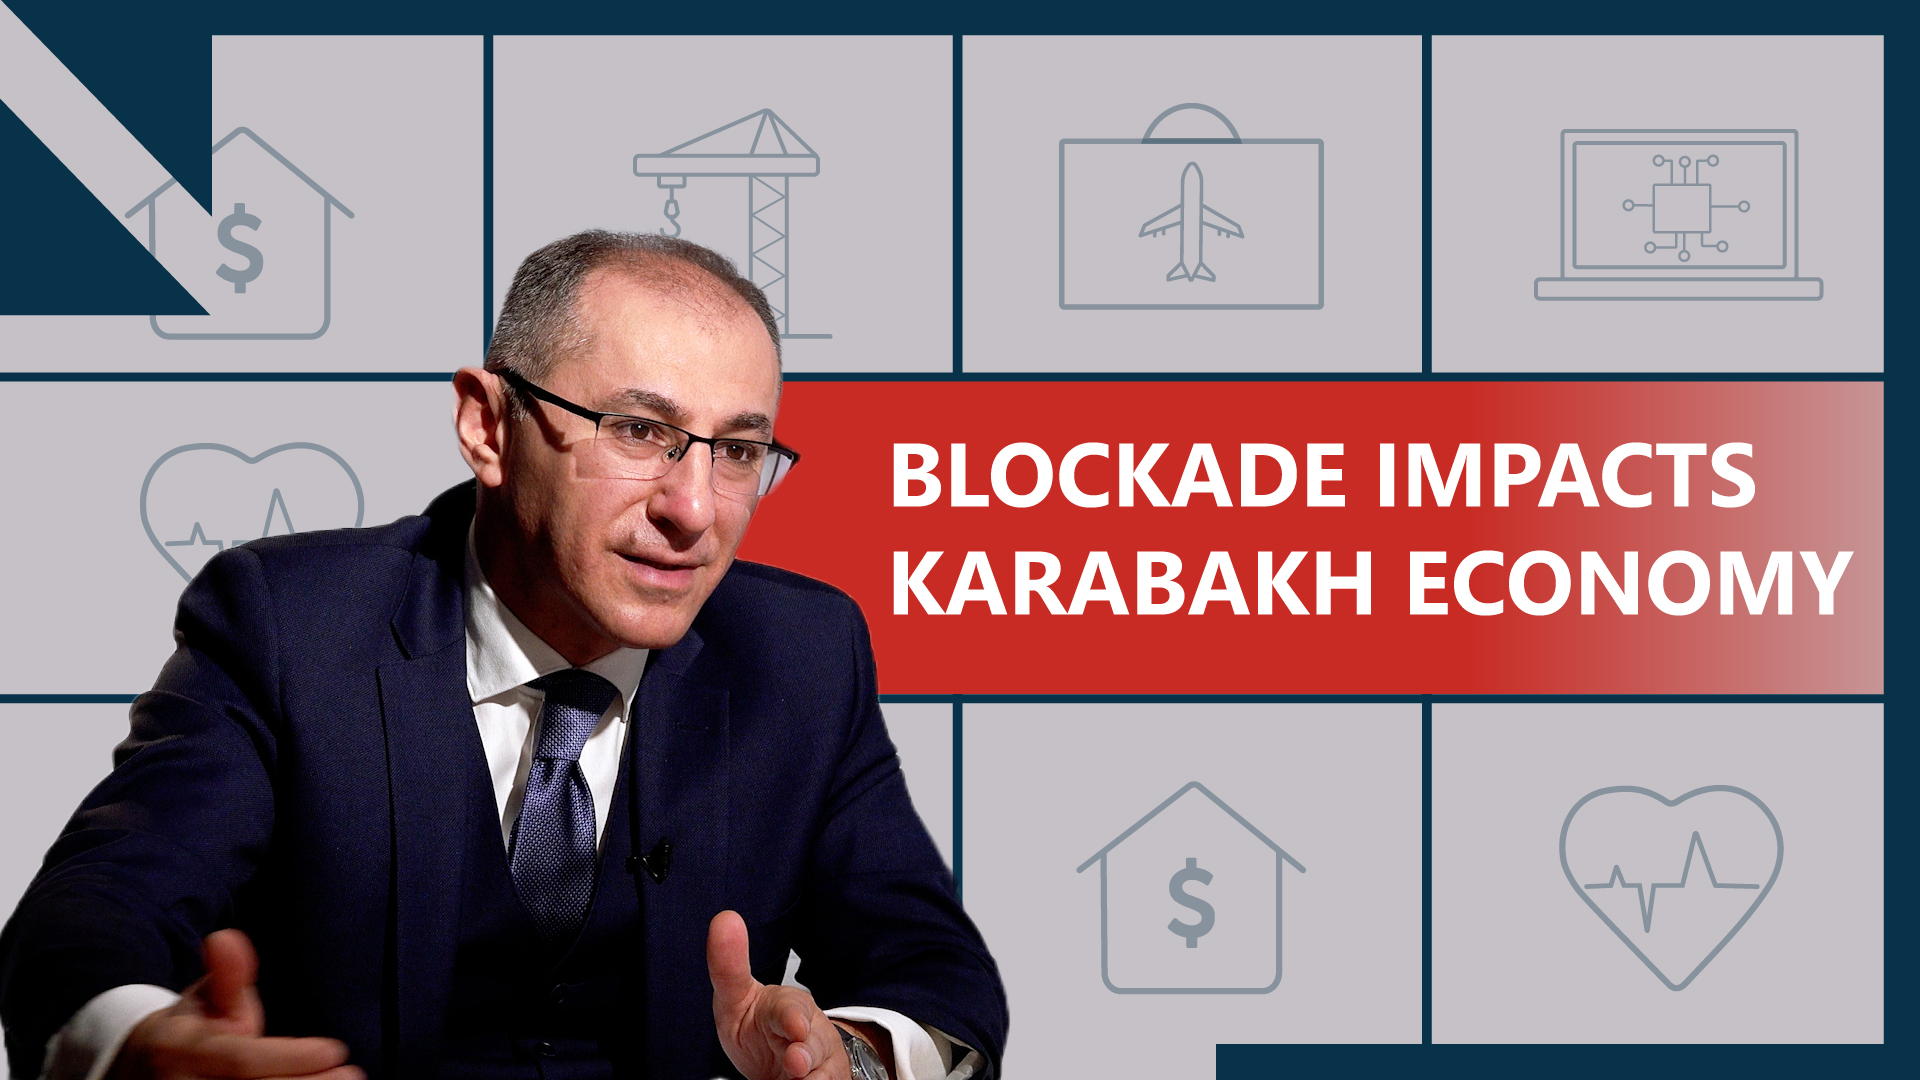 AZERBAIJAN’S BLOCKADE: ECONOMIC IMPACT